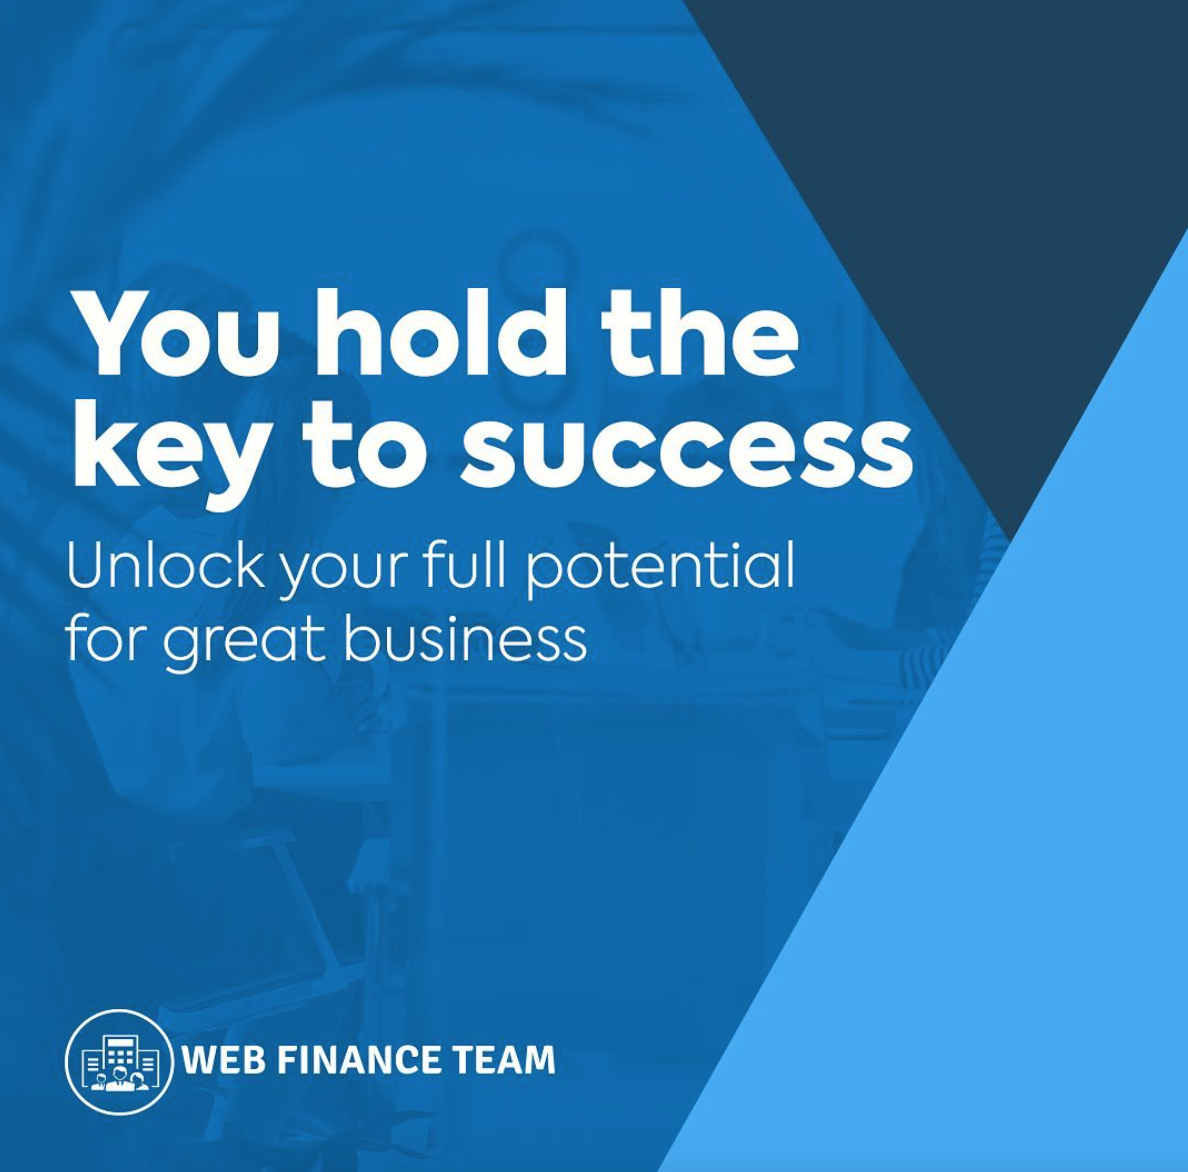 Web Finance Team's Digital Marketing Strategy Saved My Business